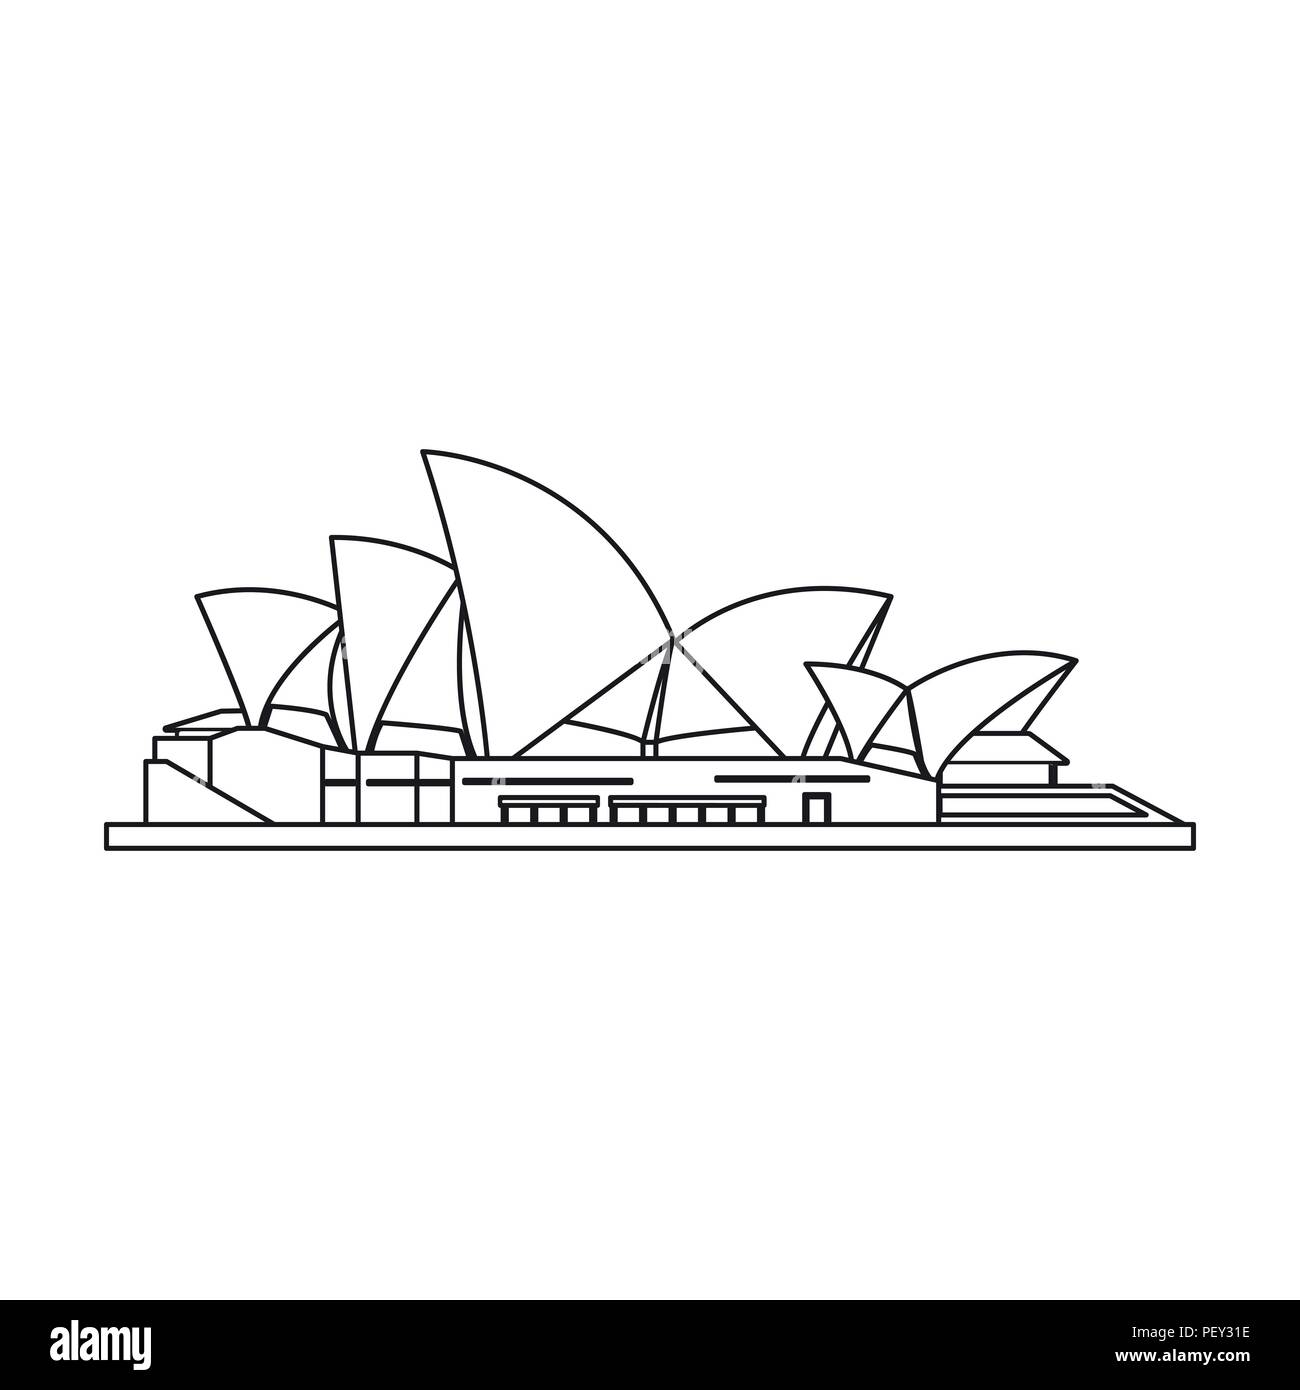 120425_02 Sydney Opera House | Still catching up - my sketch… | Flickr